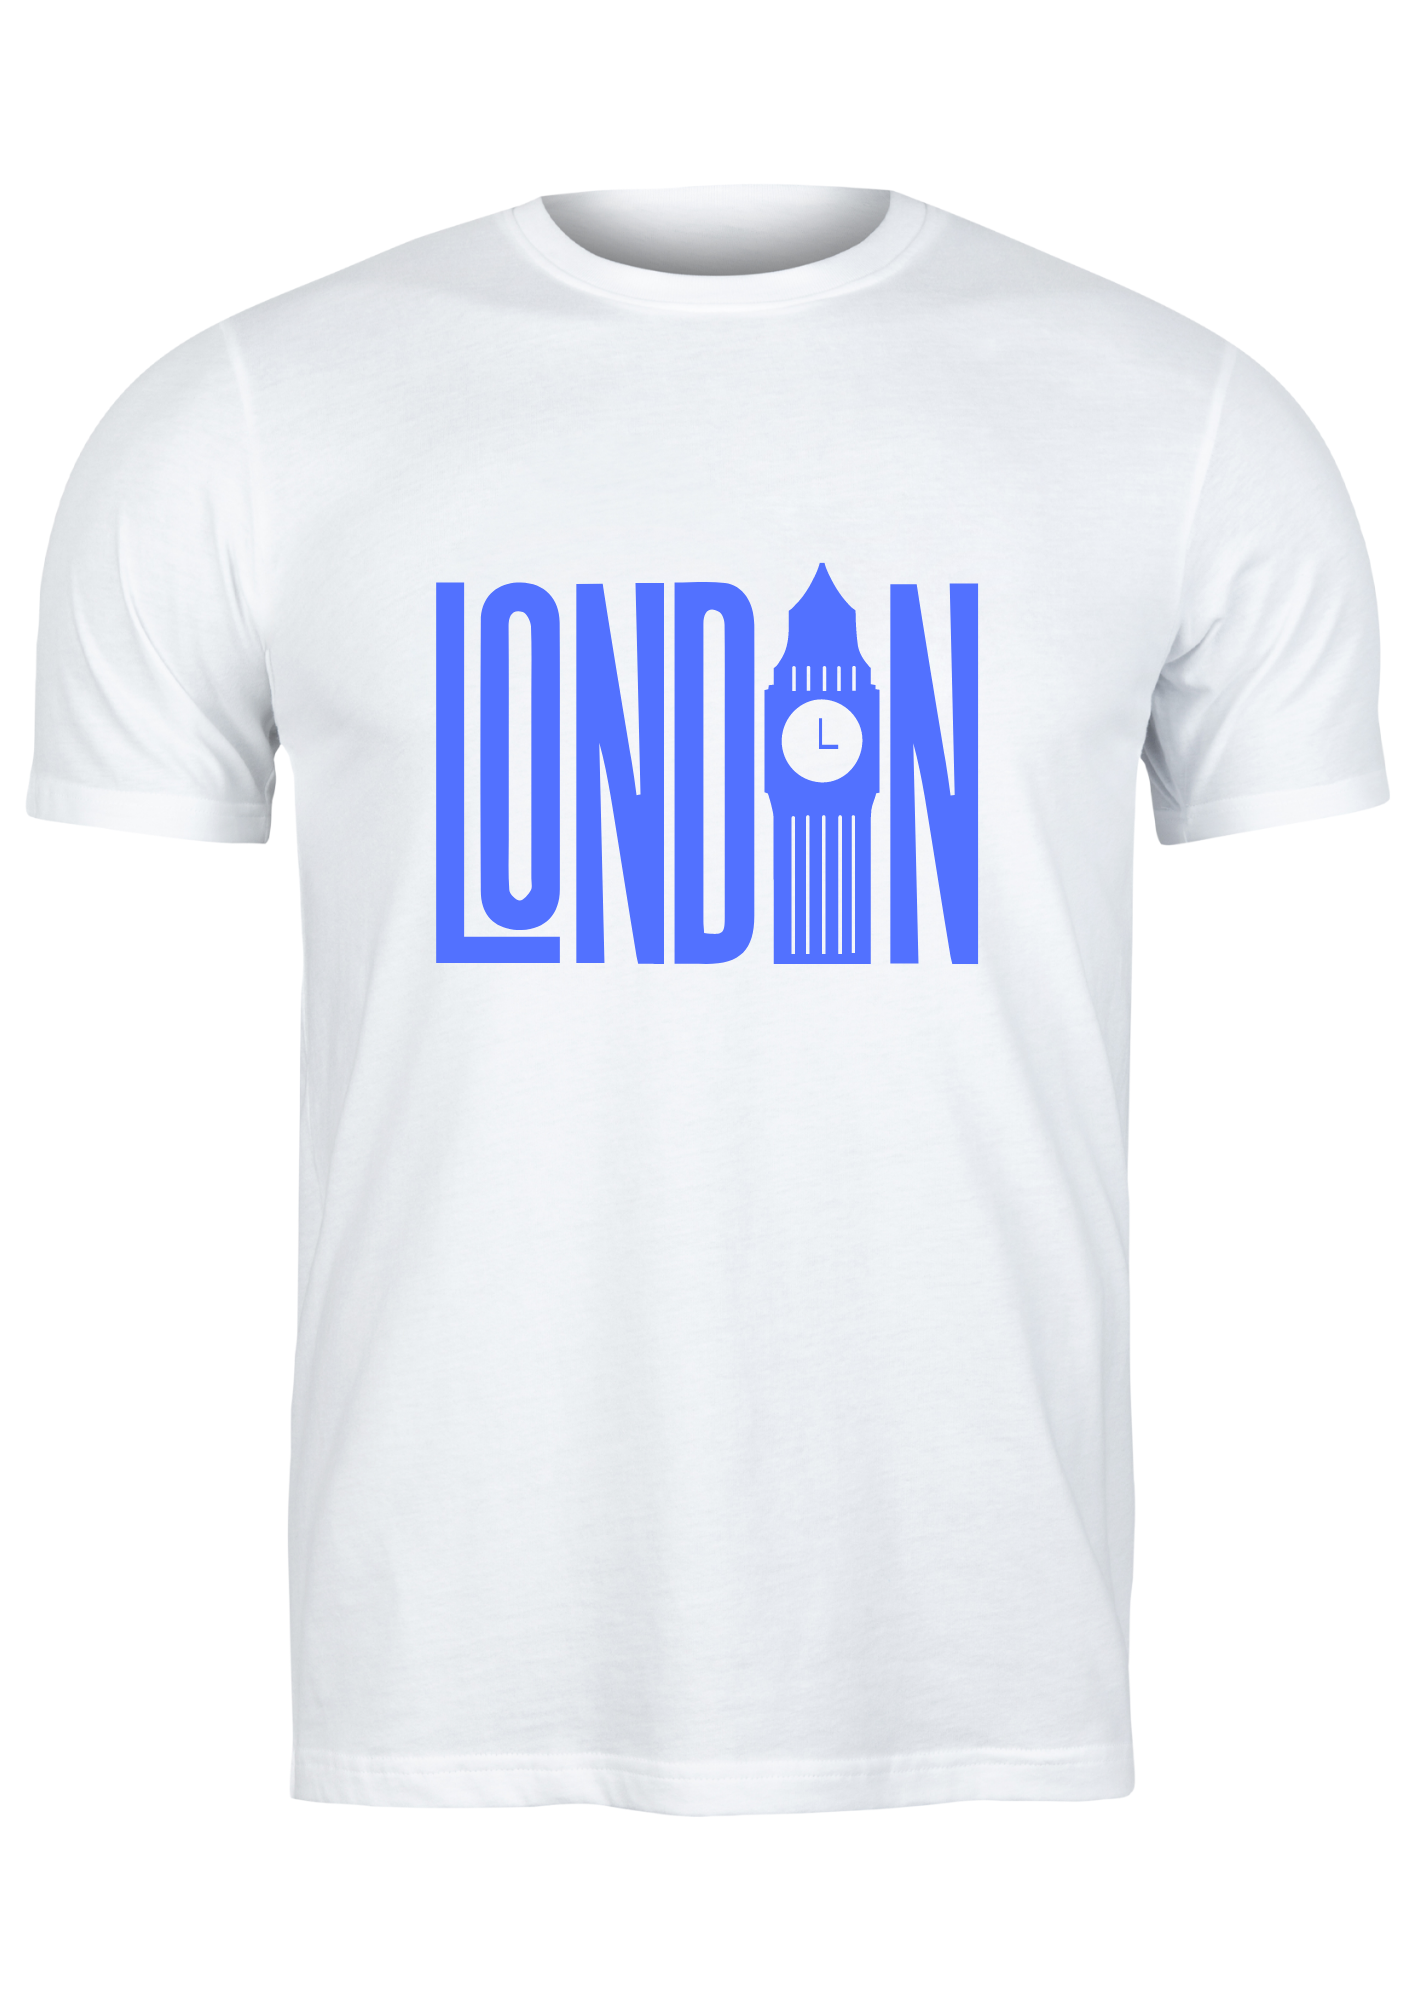 Unisex T Shirt Printed London Big Ben